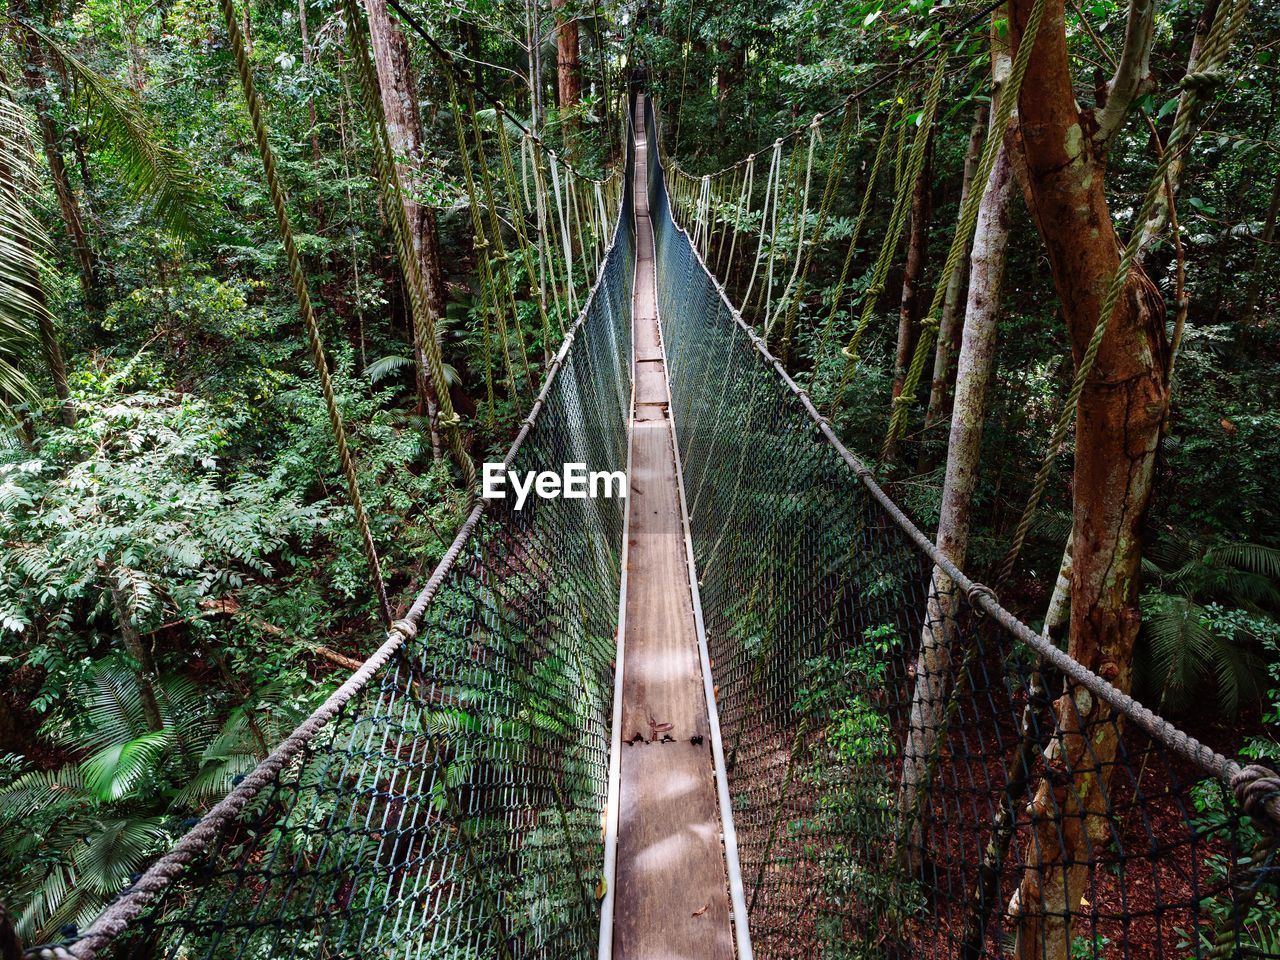 Canopy walk in taman negara national park, malaysia